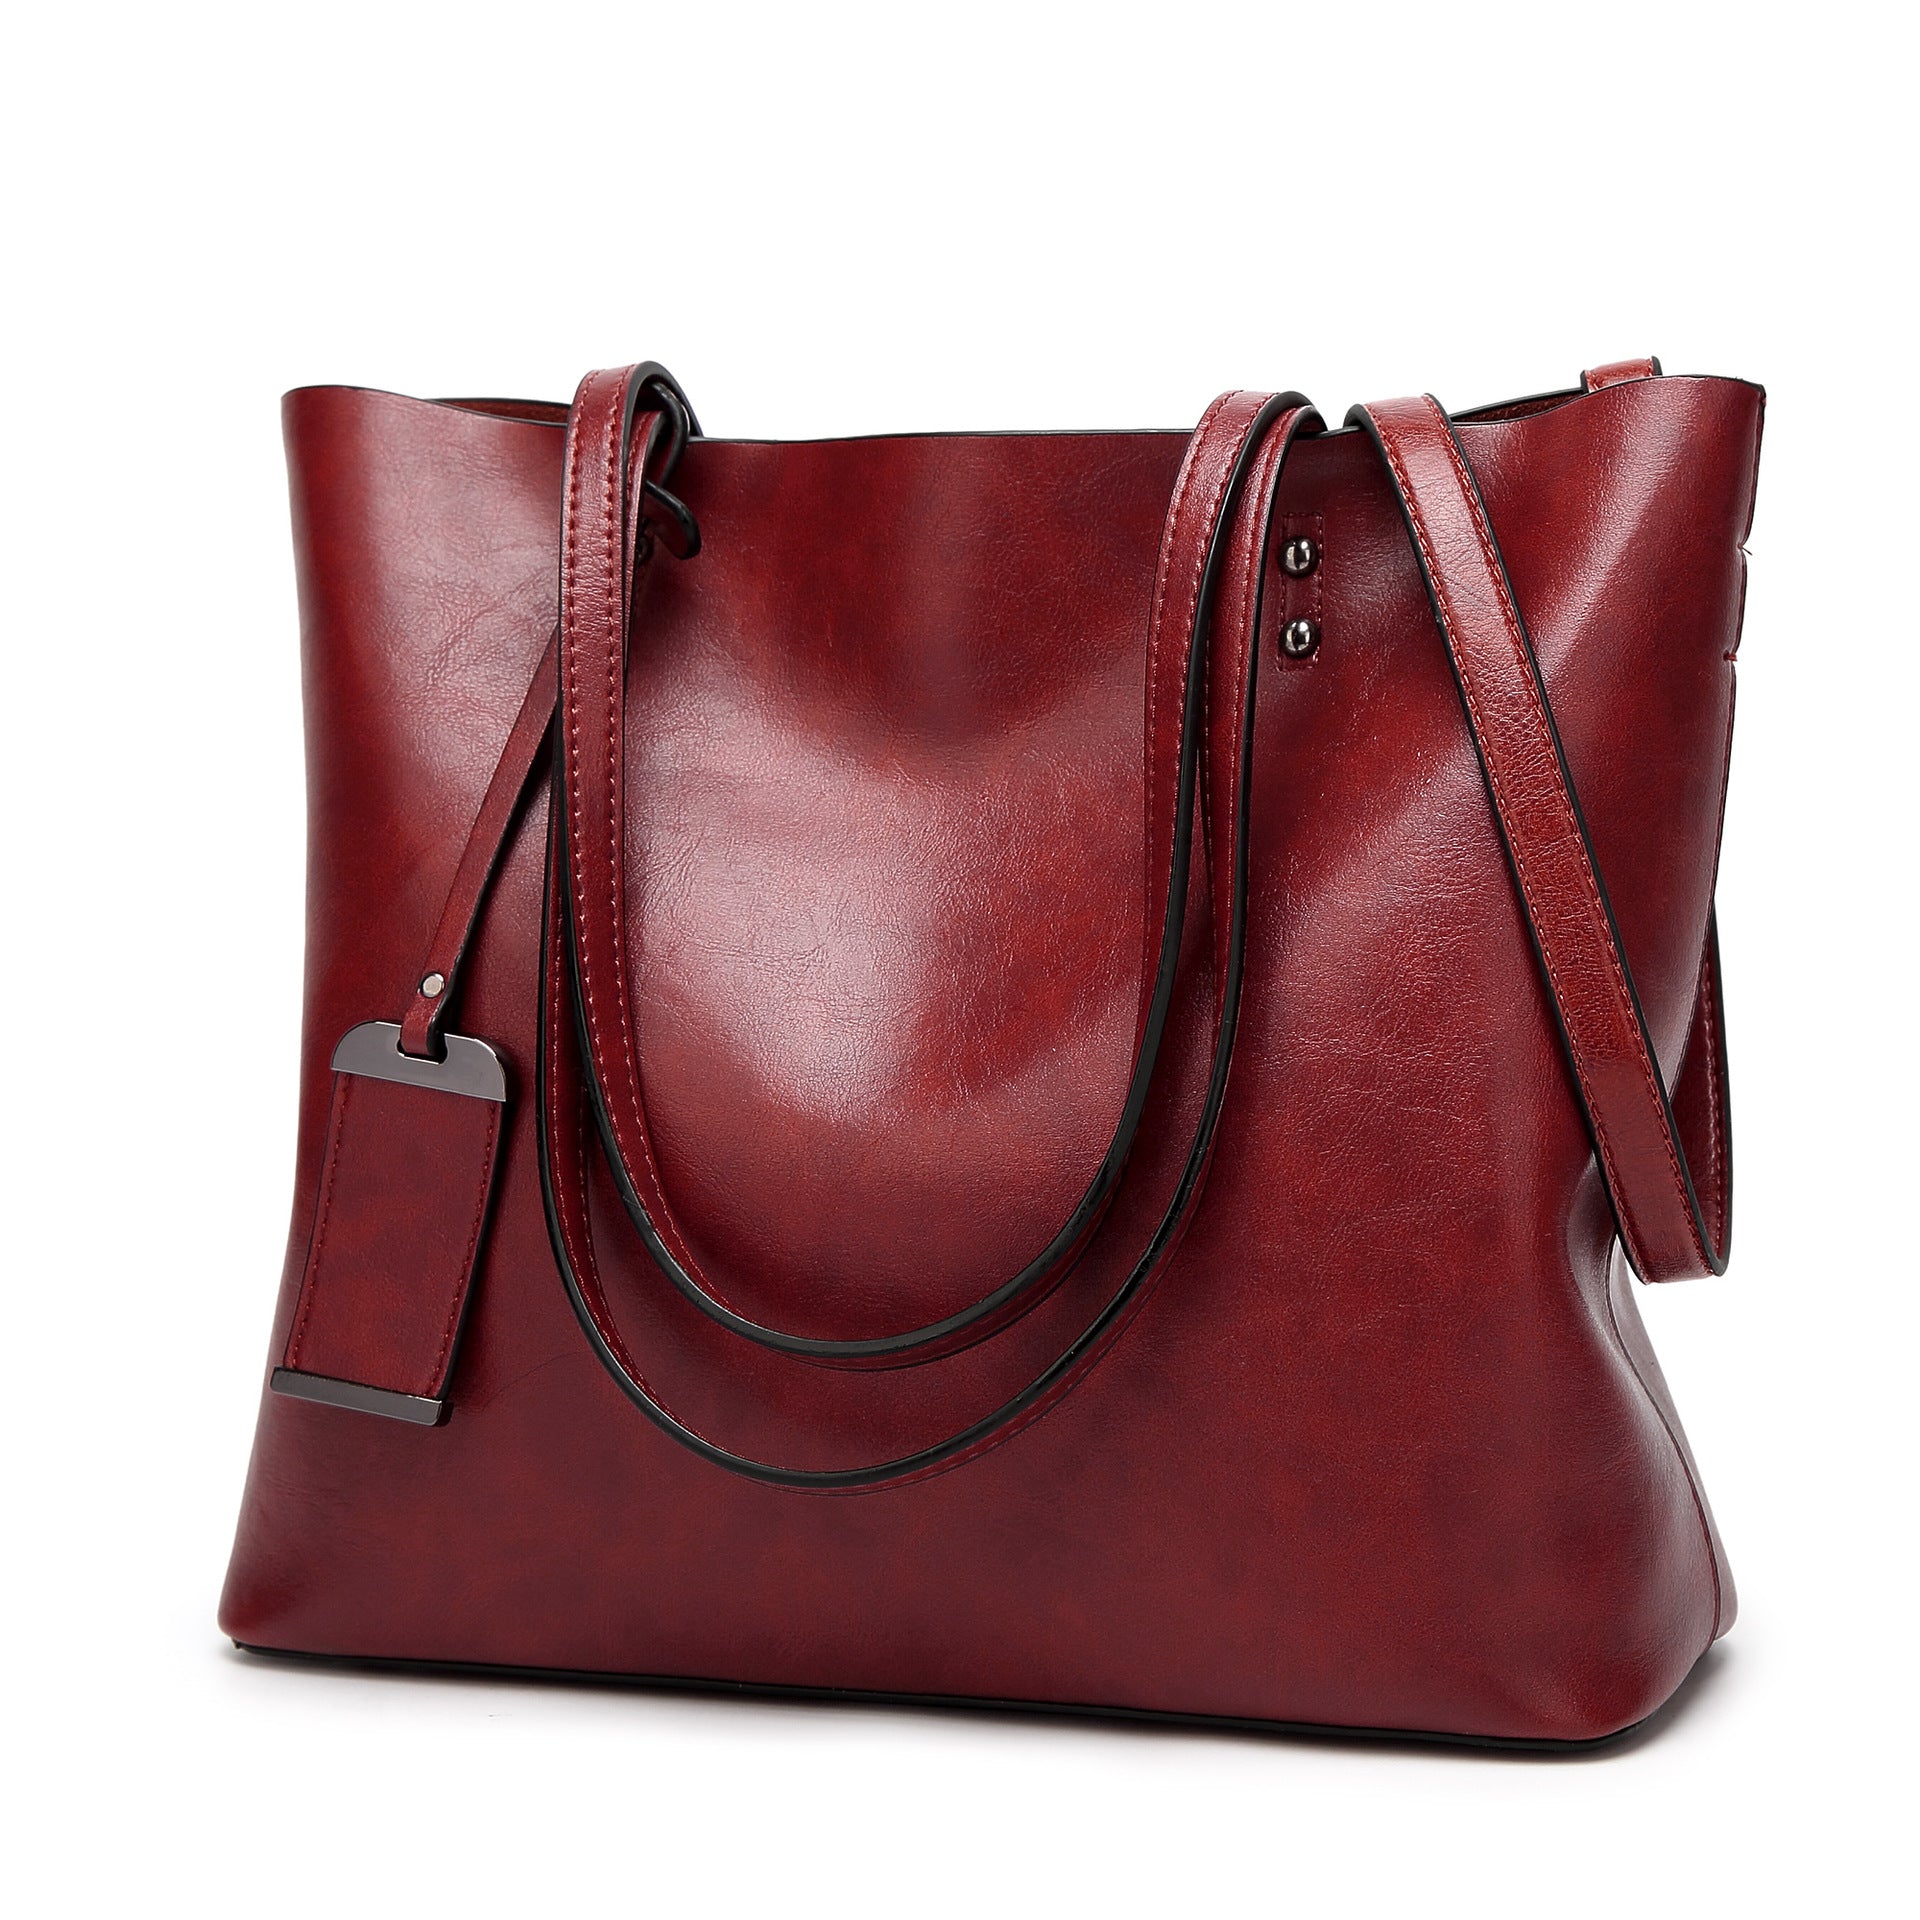 Women's Minimalist Shoulder Bags in Vegan Leather - ROMY TISA